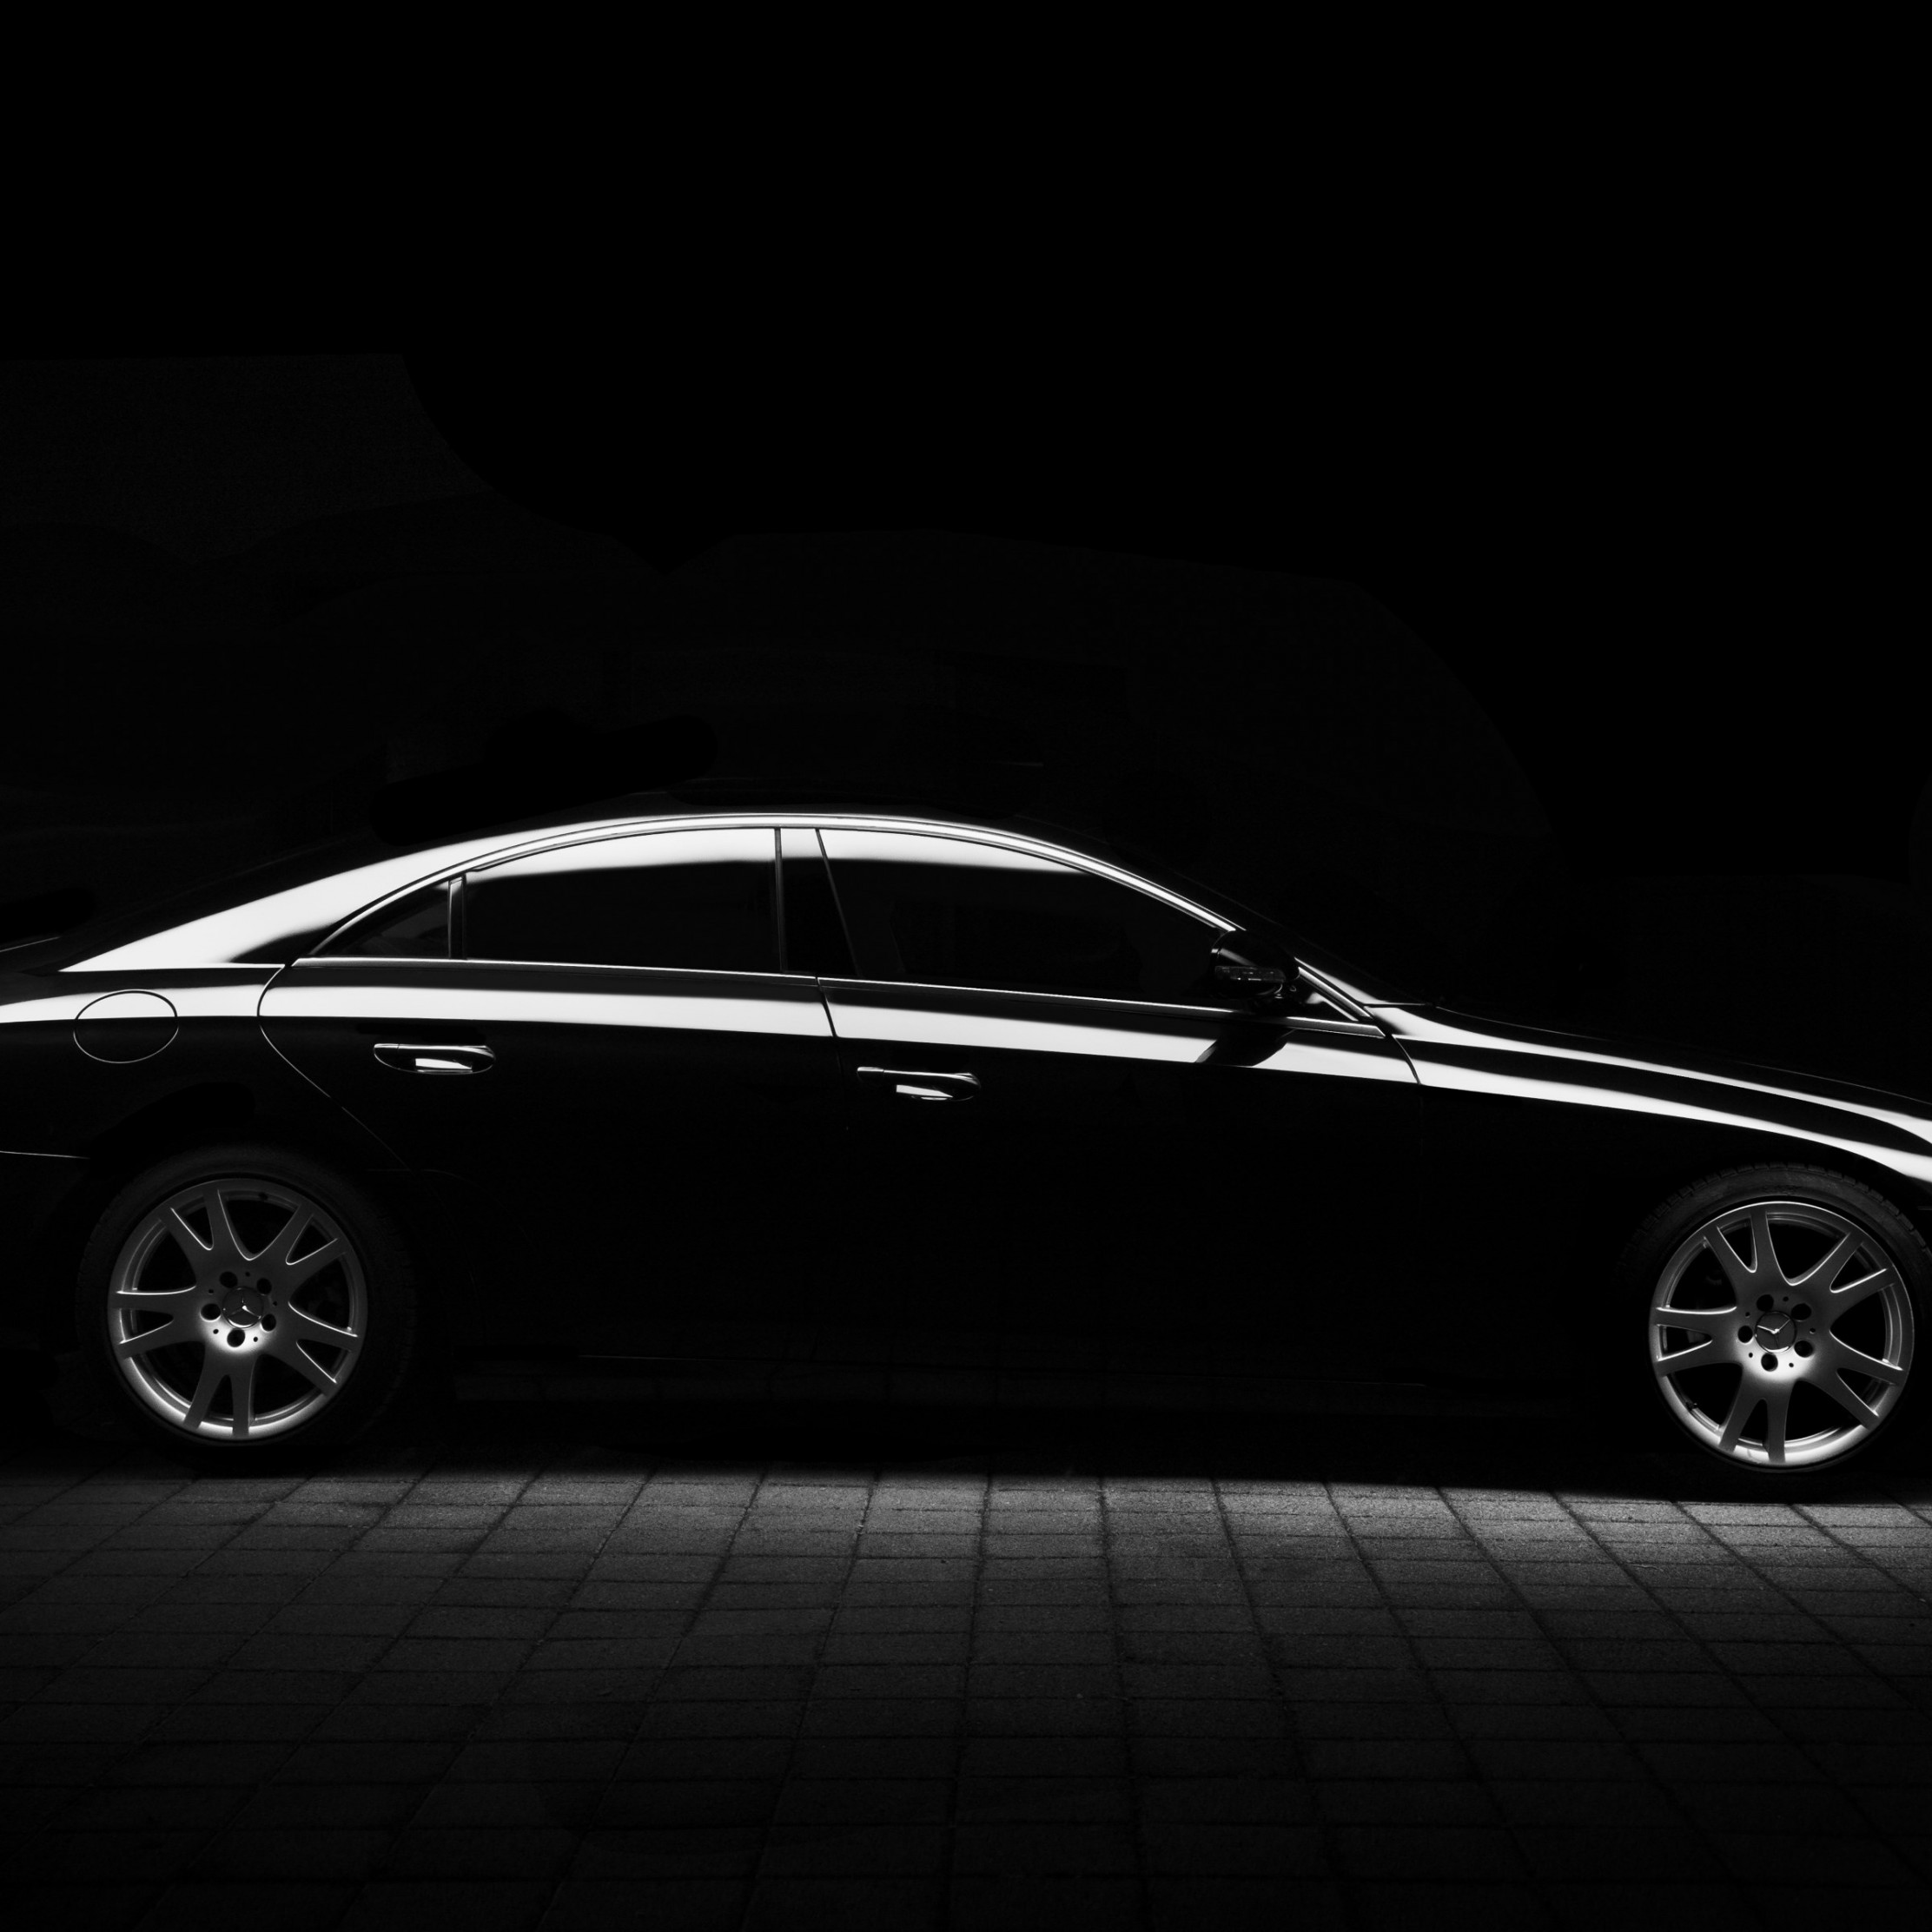 Silhouette of a Mercedes car wallpaper 2224x2224